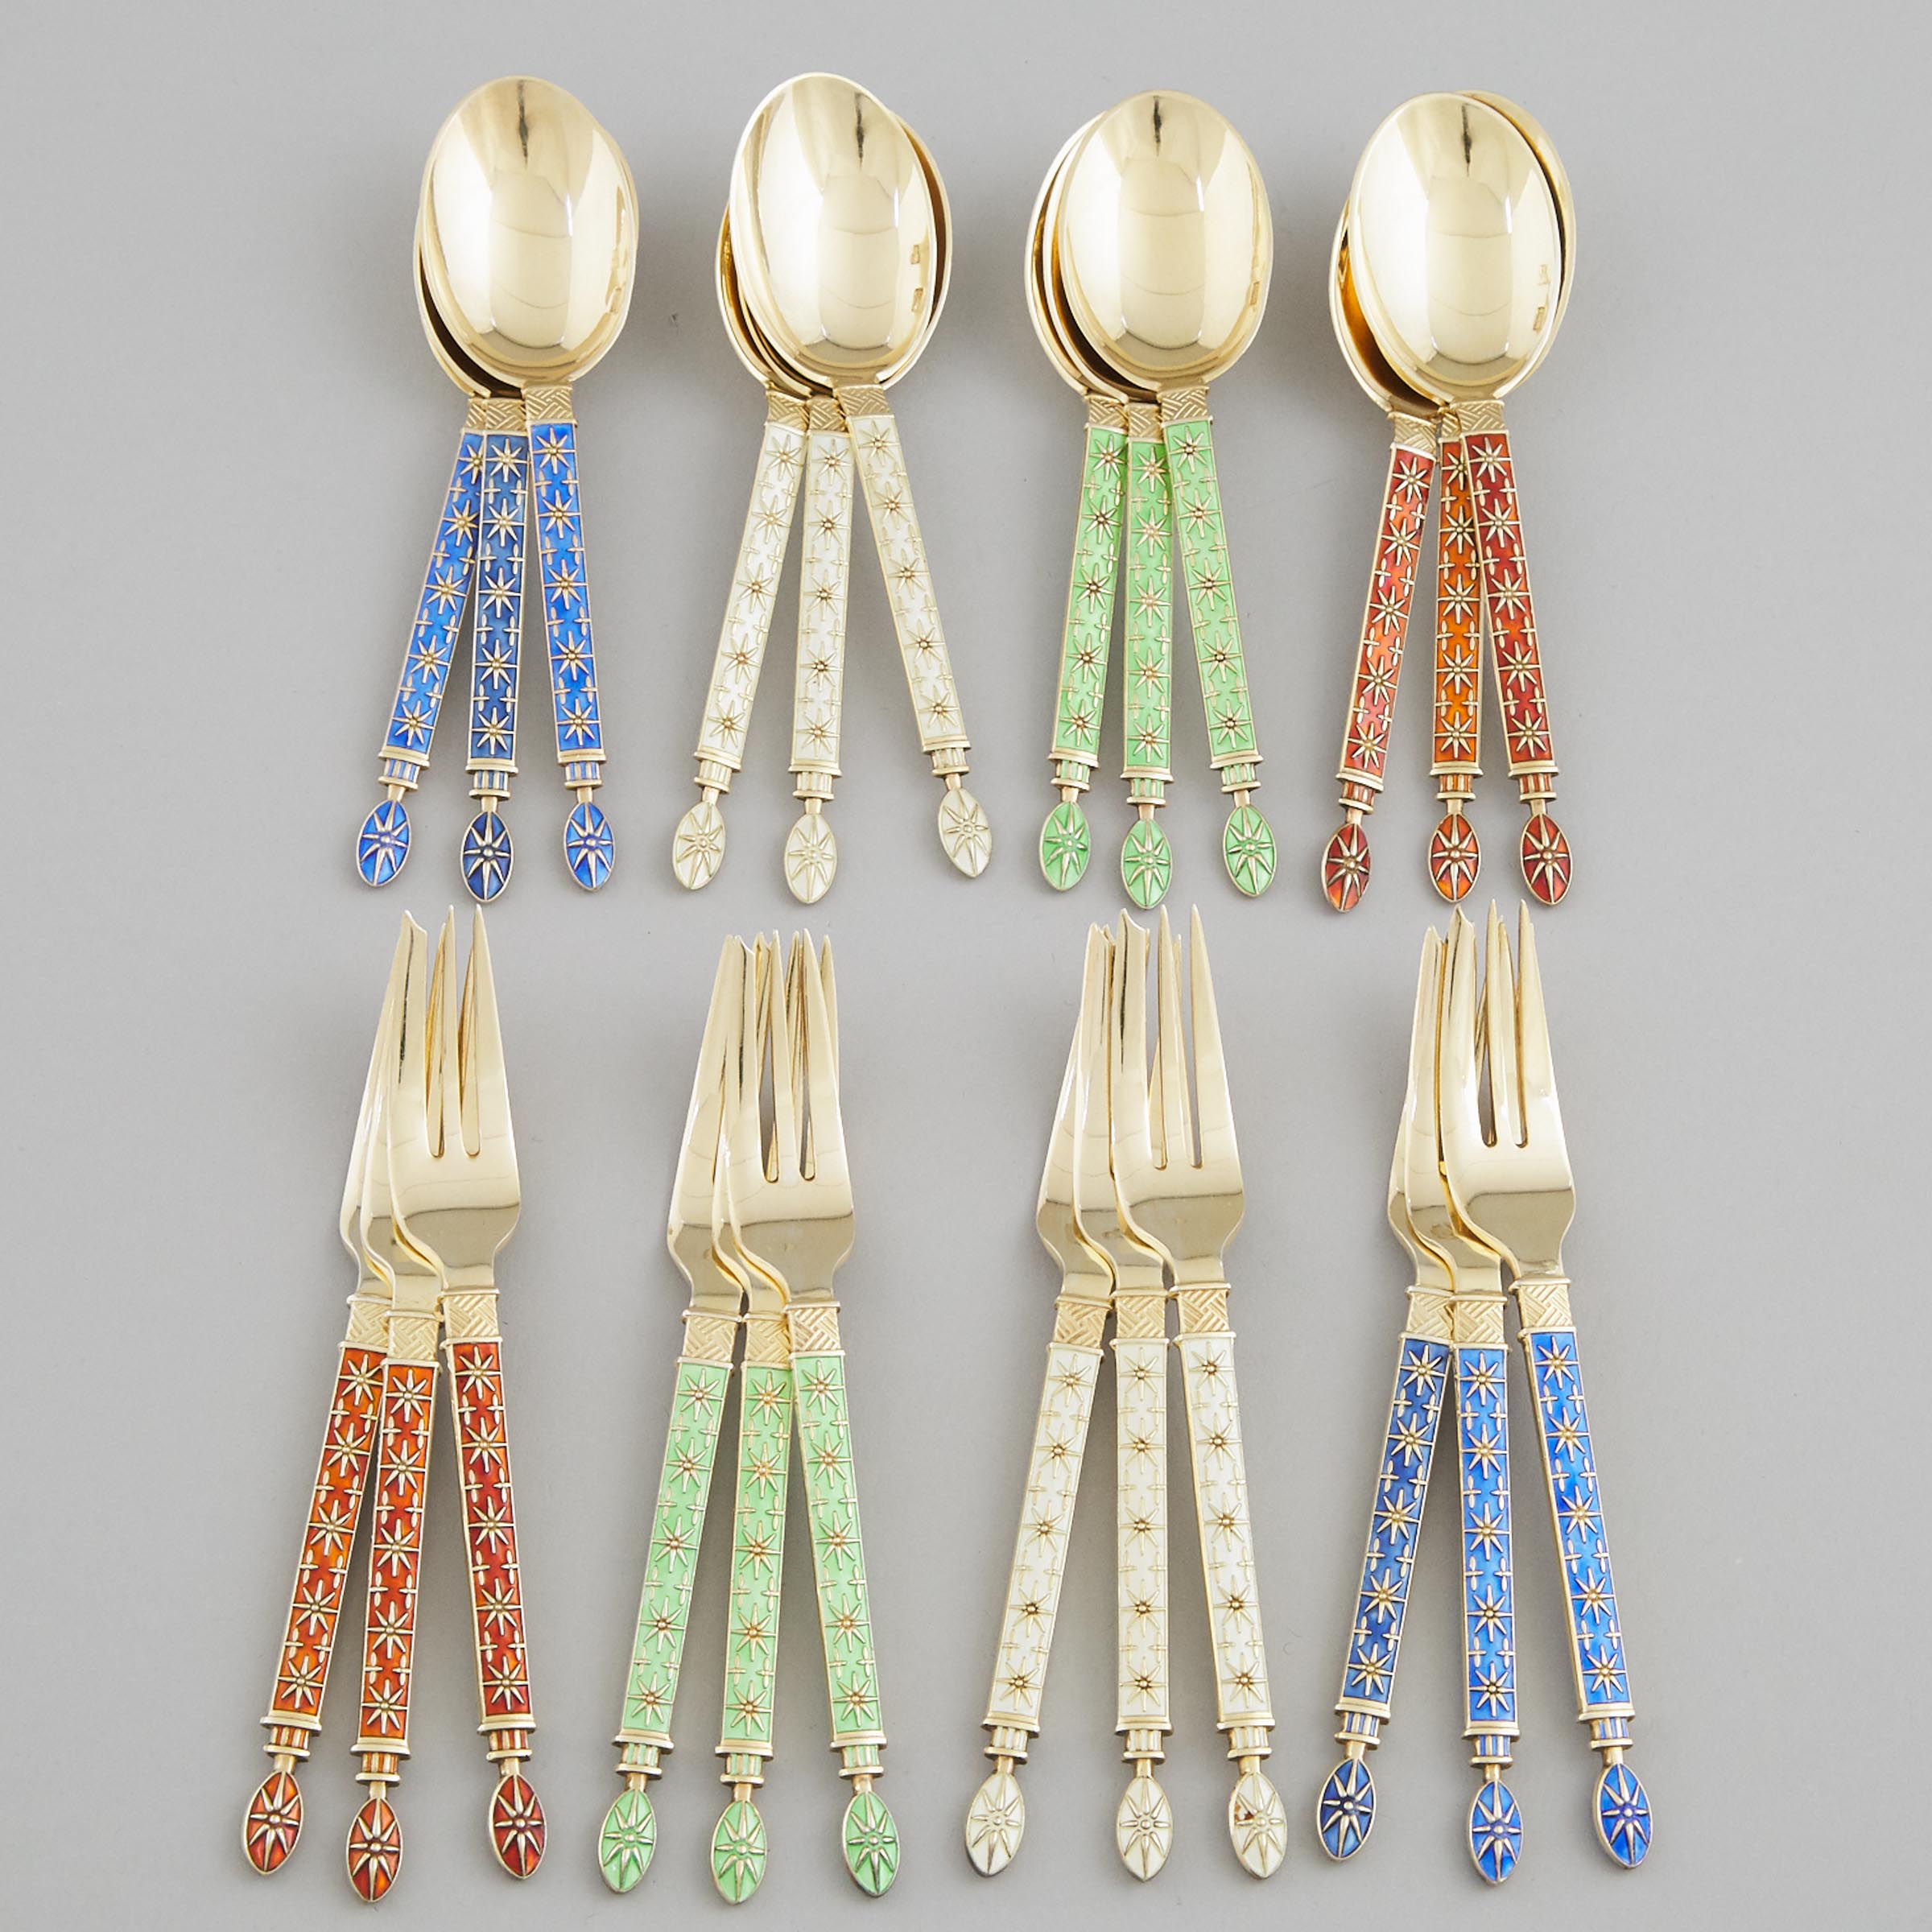 Twelve Norwegian Silver-Gilt and Enamel Tea Spoons and Twelve Pastry Forks, J. Tostrup, Oslo, 20th century